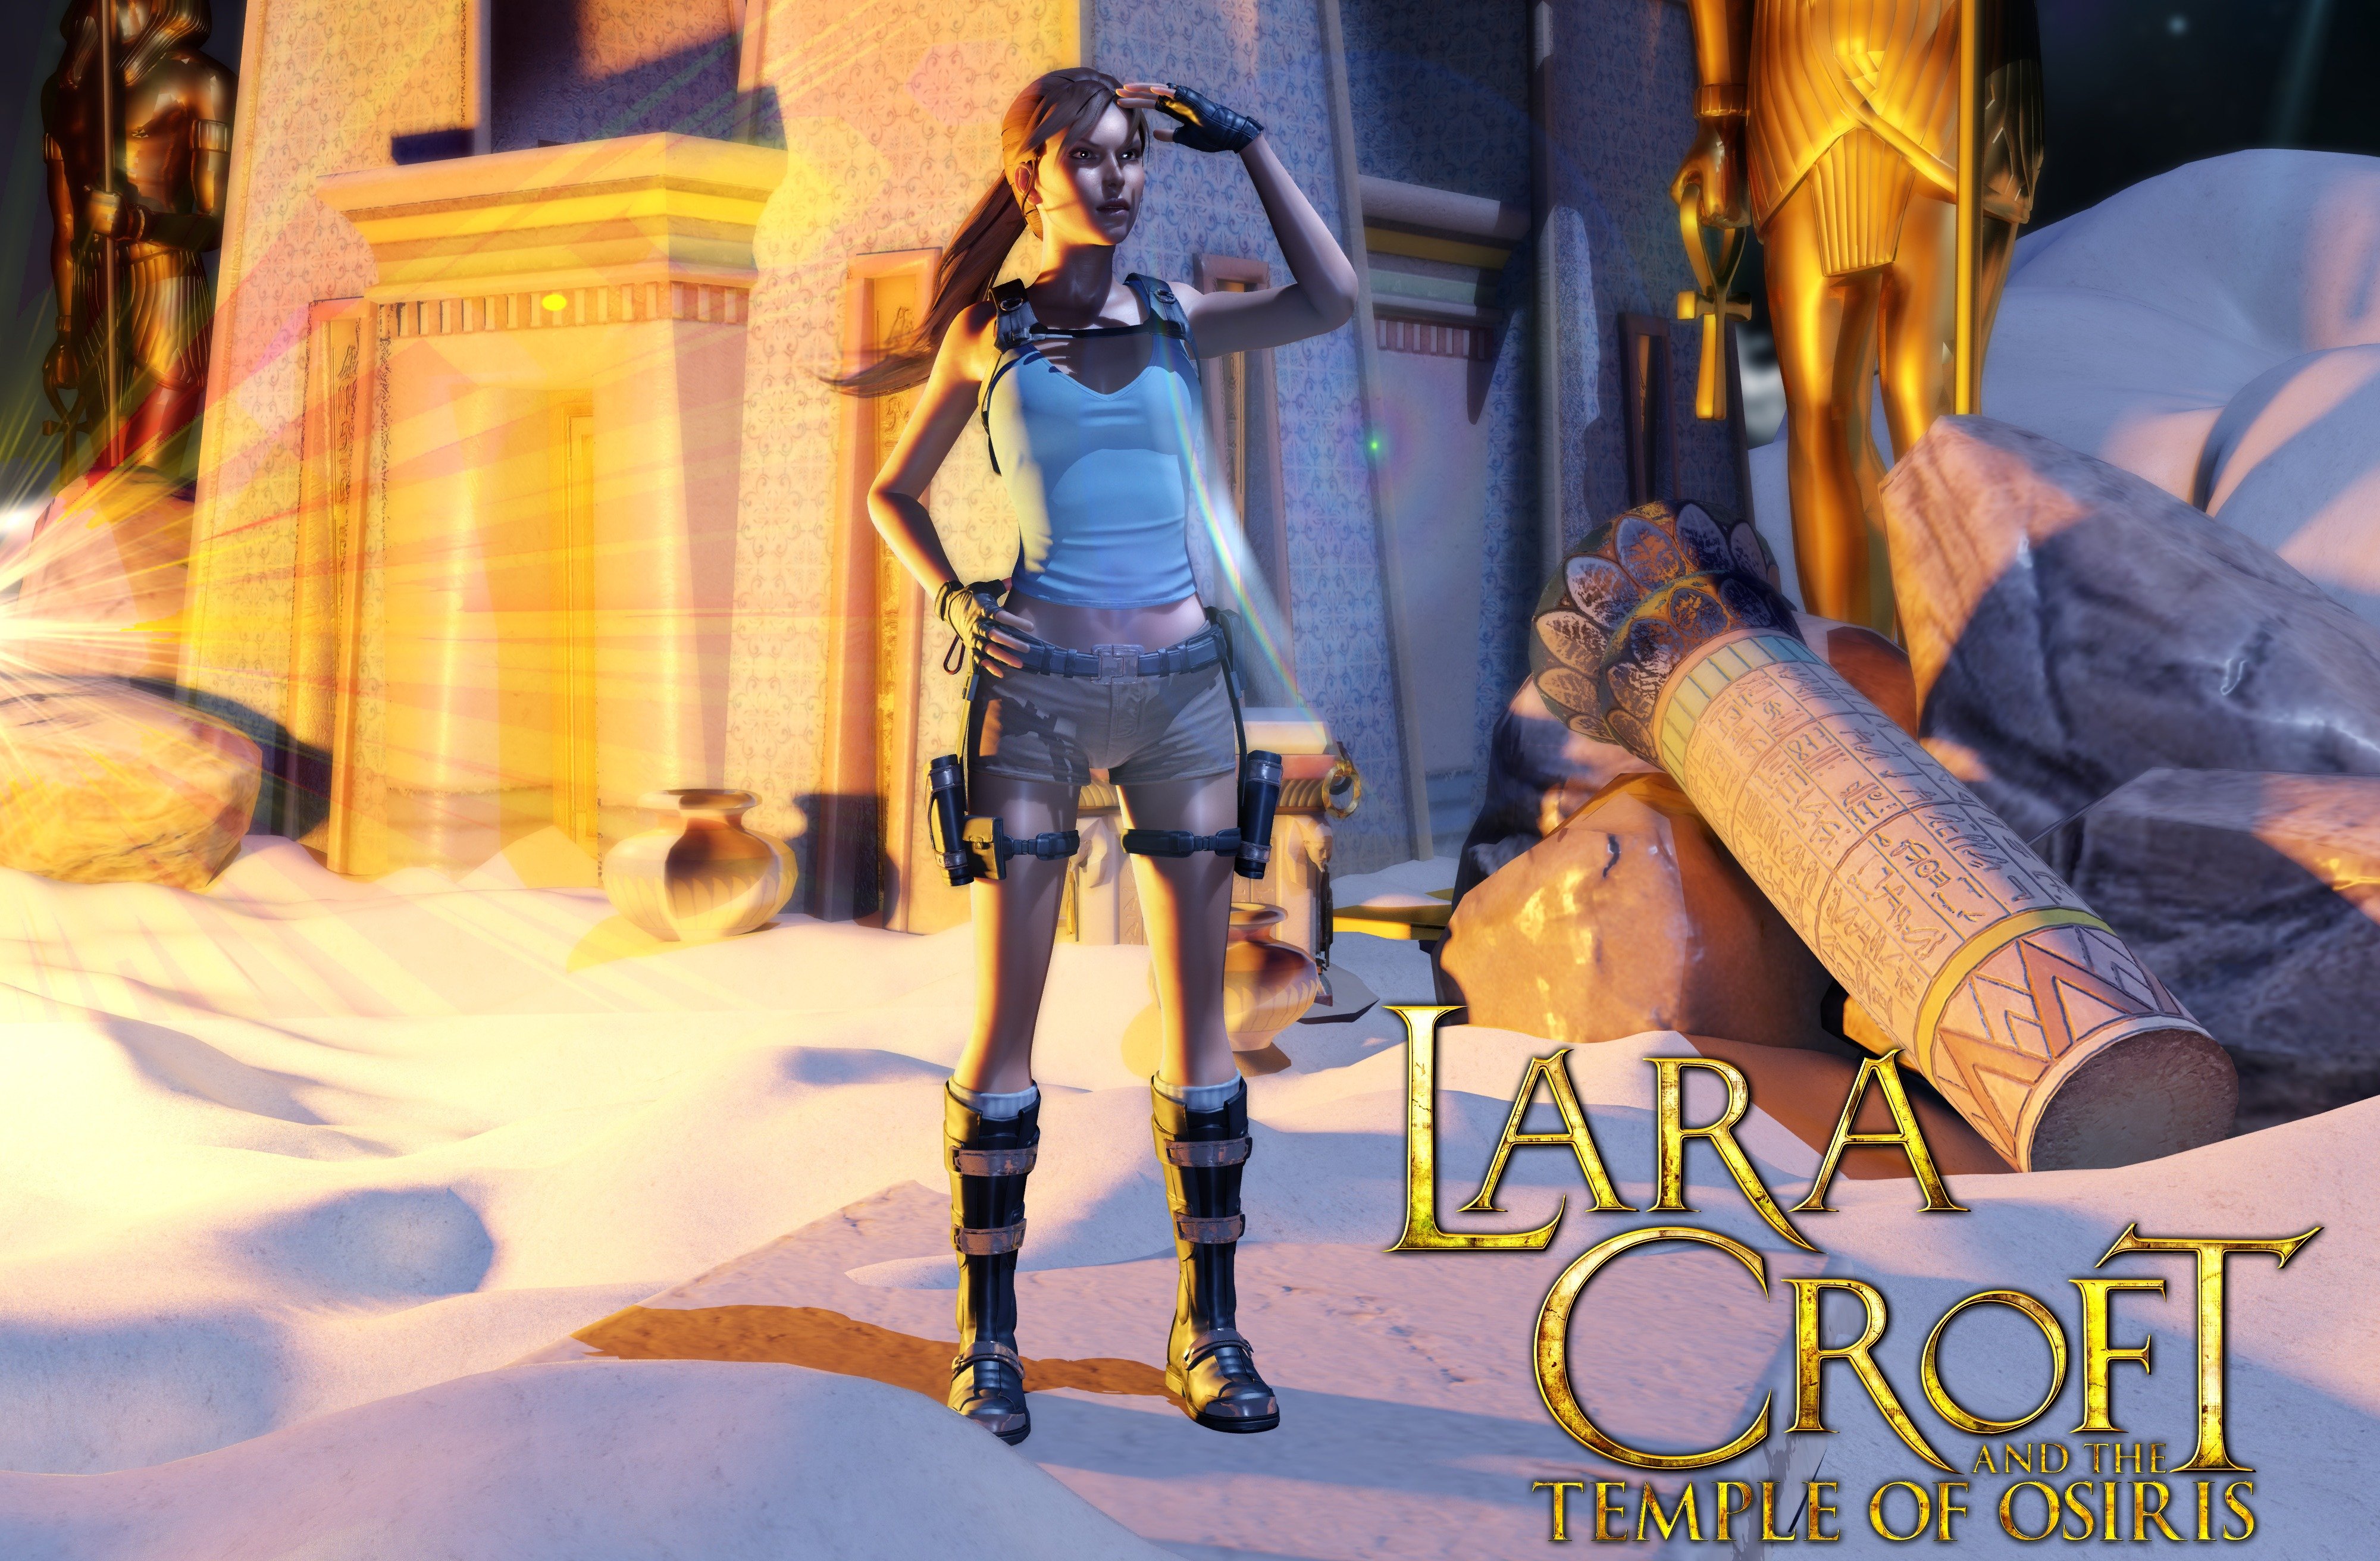 lara, Croft, Action, Adventure, Tomb, Raider, Platform, Fantasy, Girl, Girls, Warrior Wallpaper